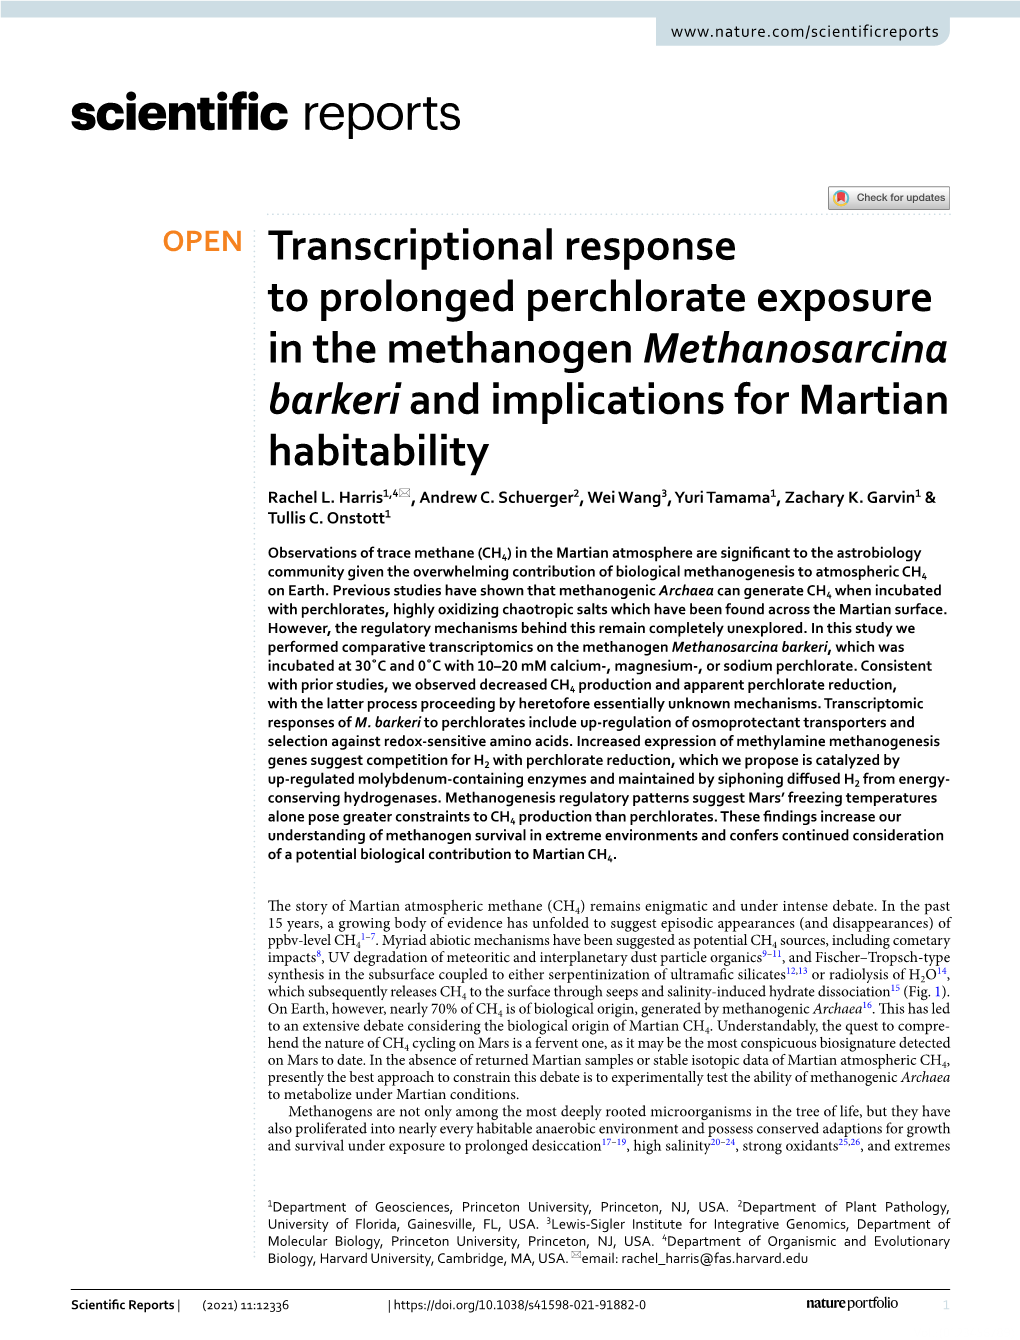 Transcriptional Response to Prolonged Perchlorate Exposure in the Methanogen Methanosarcina Barkeri and Implications for Martian Habitability Rachel L